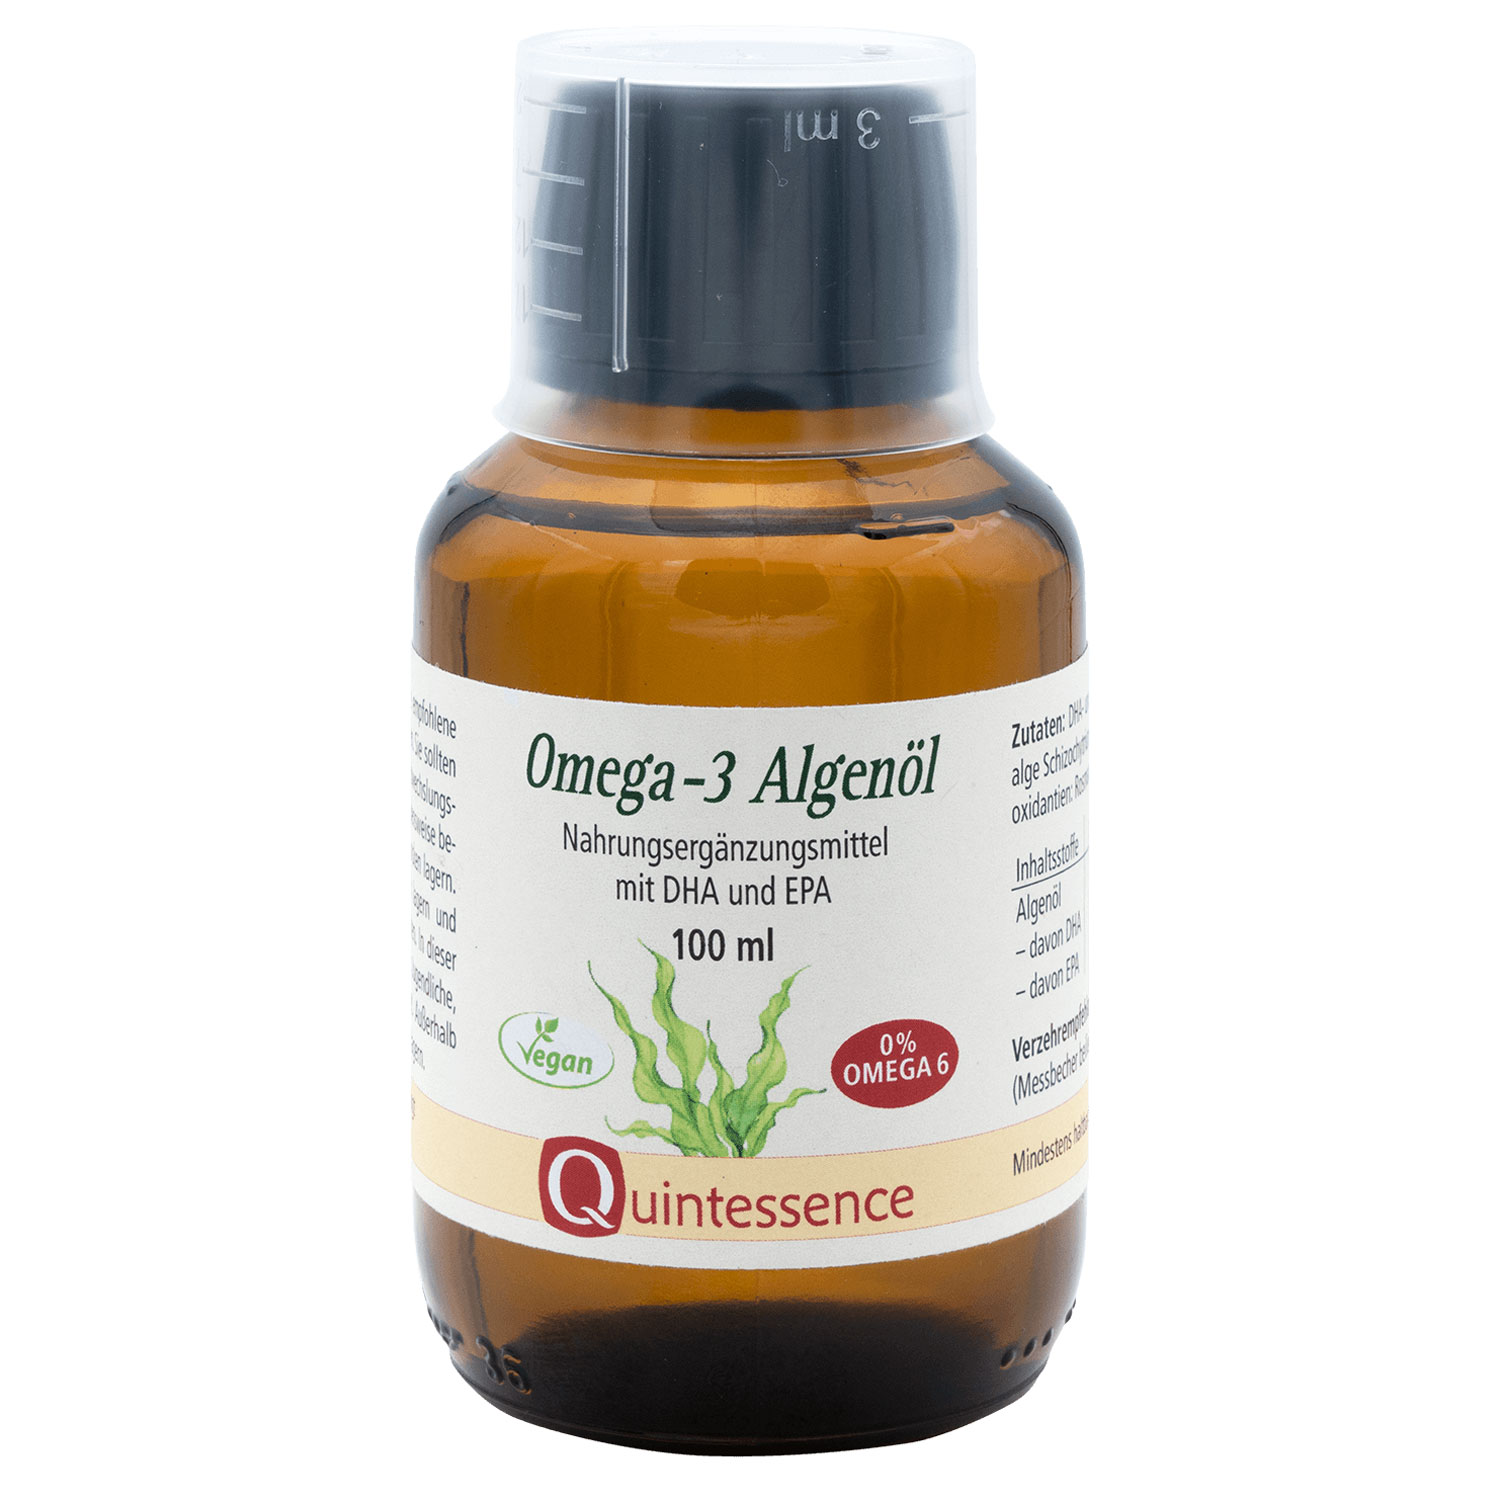 Omega-3 Algenöl von Quintessence - 100 ml